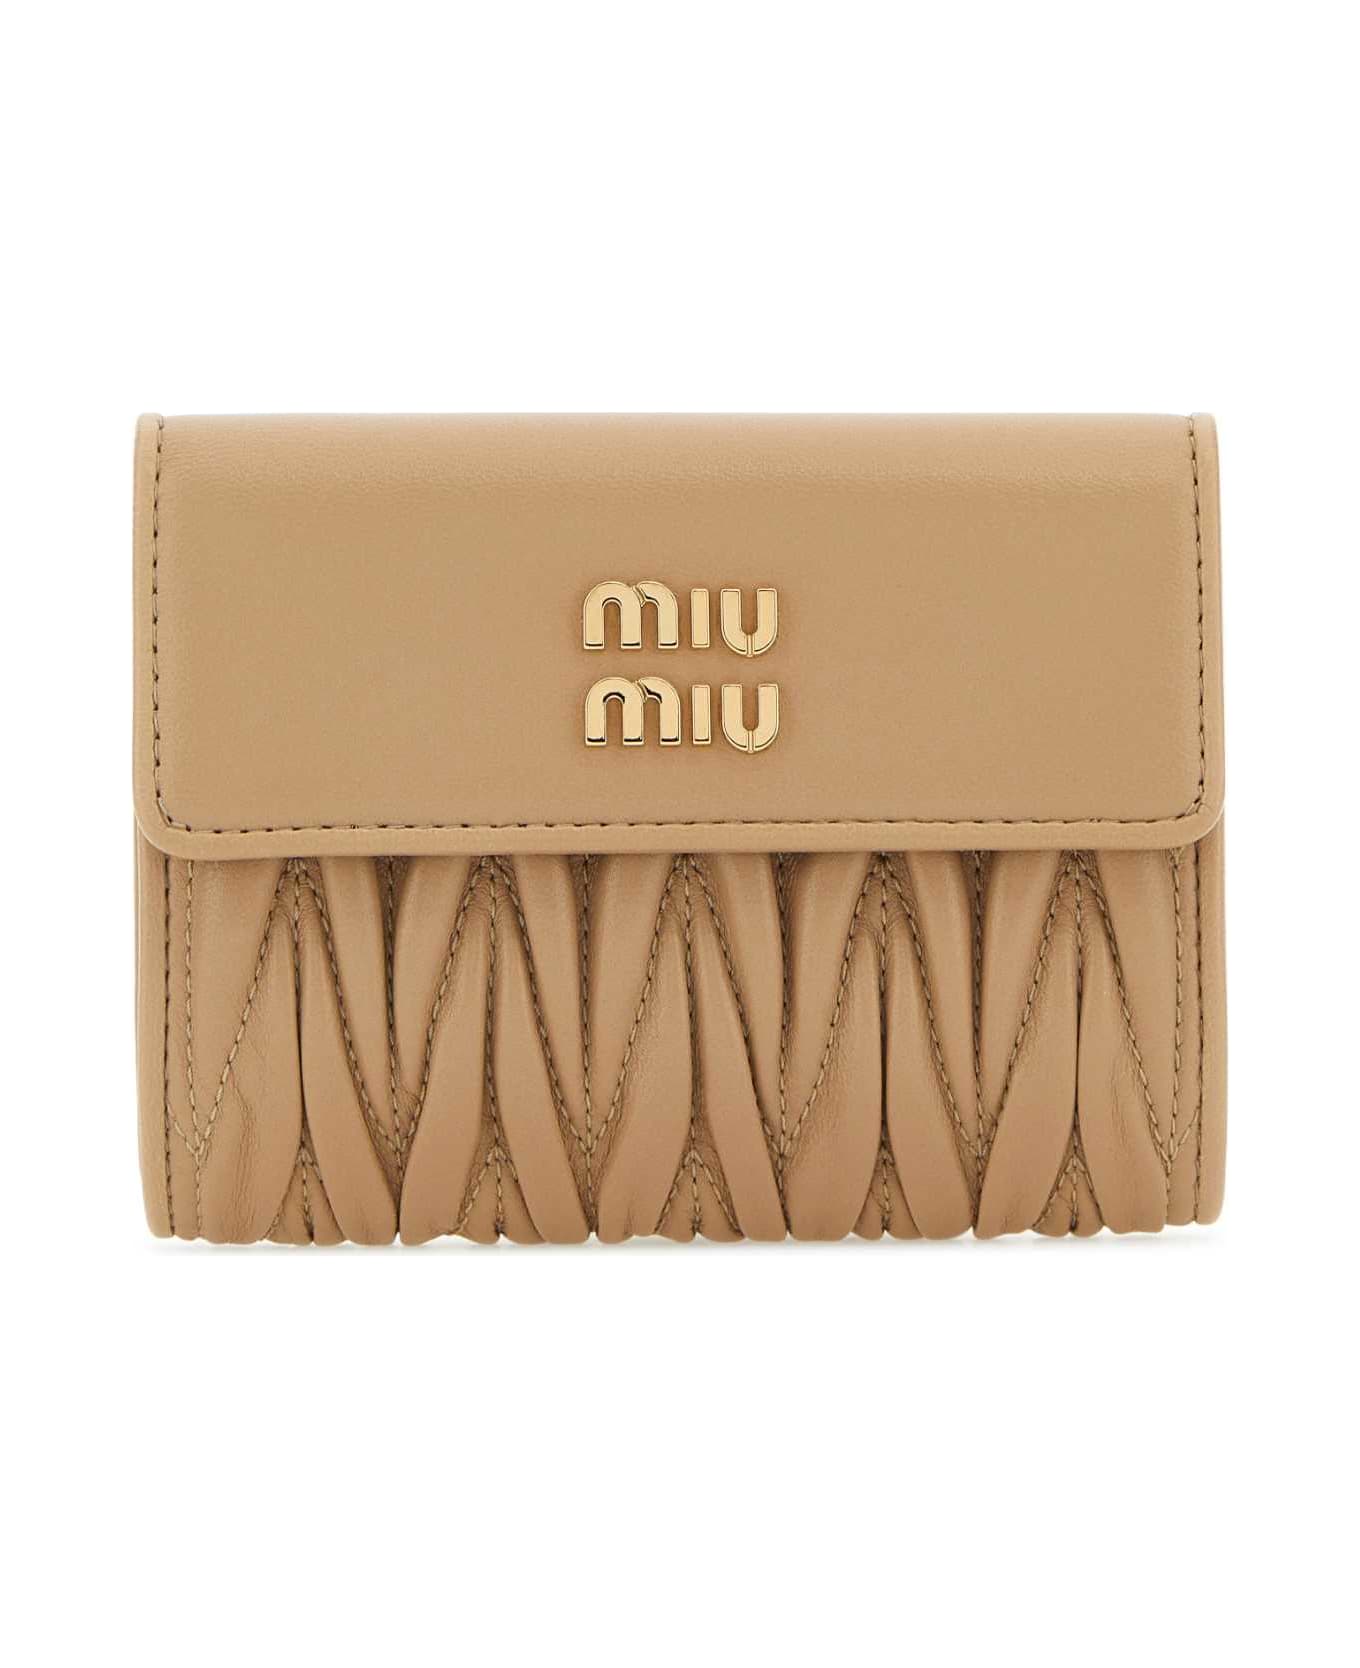 Miu Miu Sand Leather Wallet - SABBIA 財布